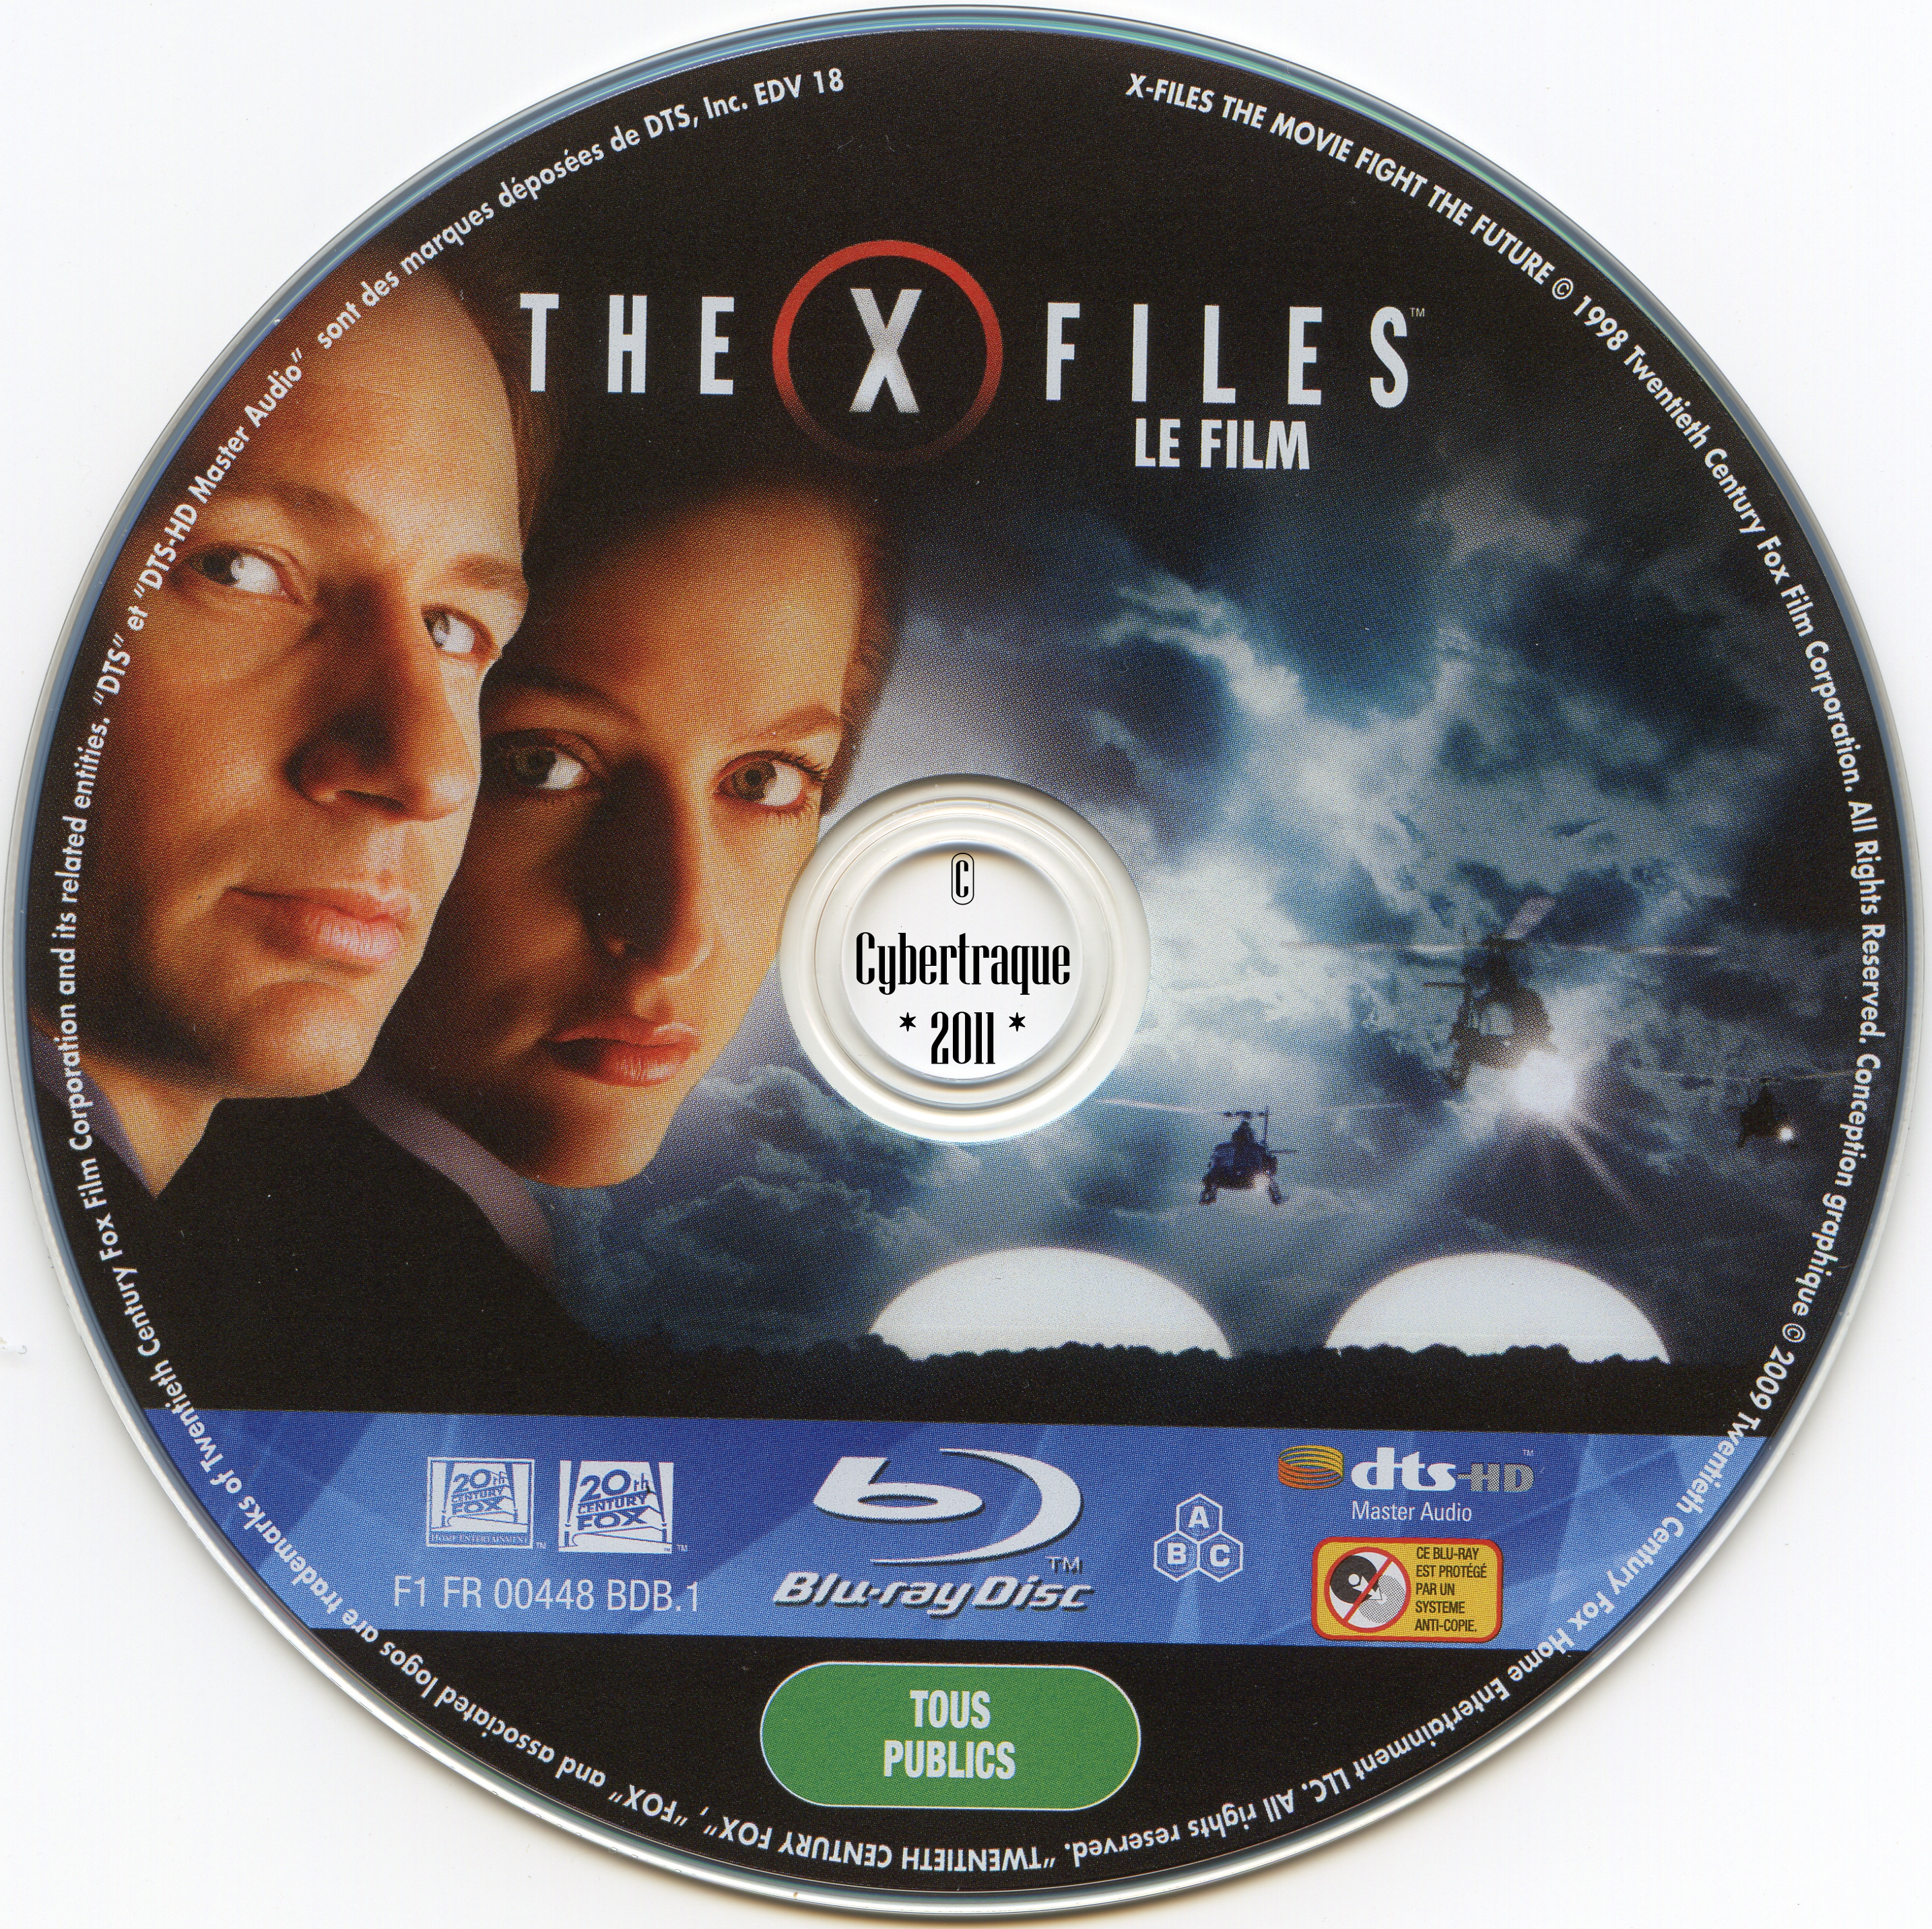 The X-files - Le film (BLU-RAY)